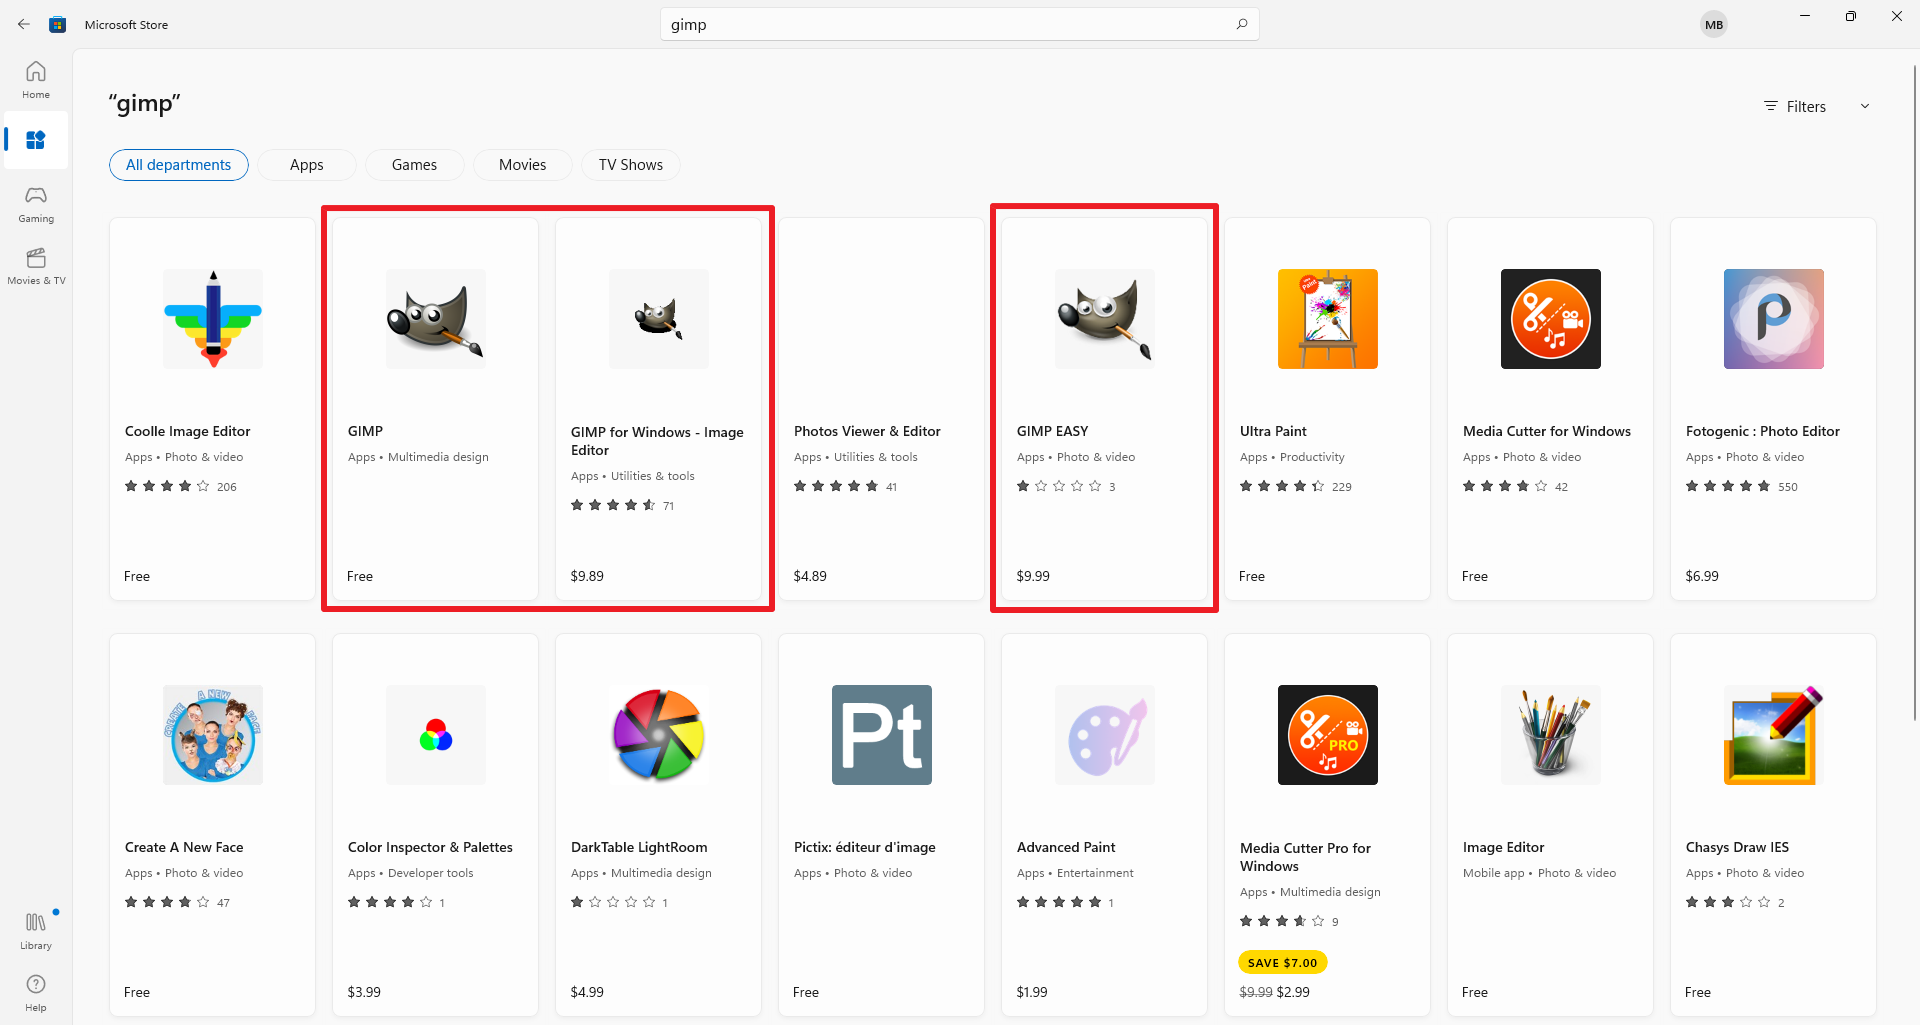 Microsoft is trying to renew the app store 'Microsoft Store' - GIGAZINE